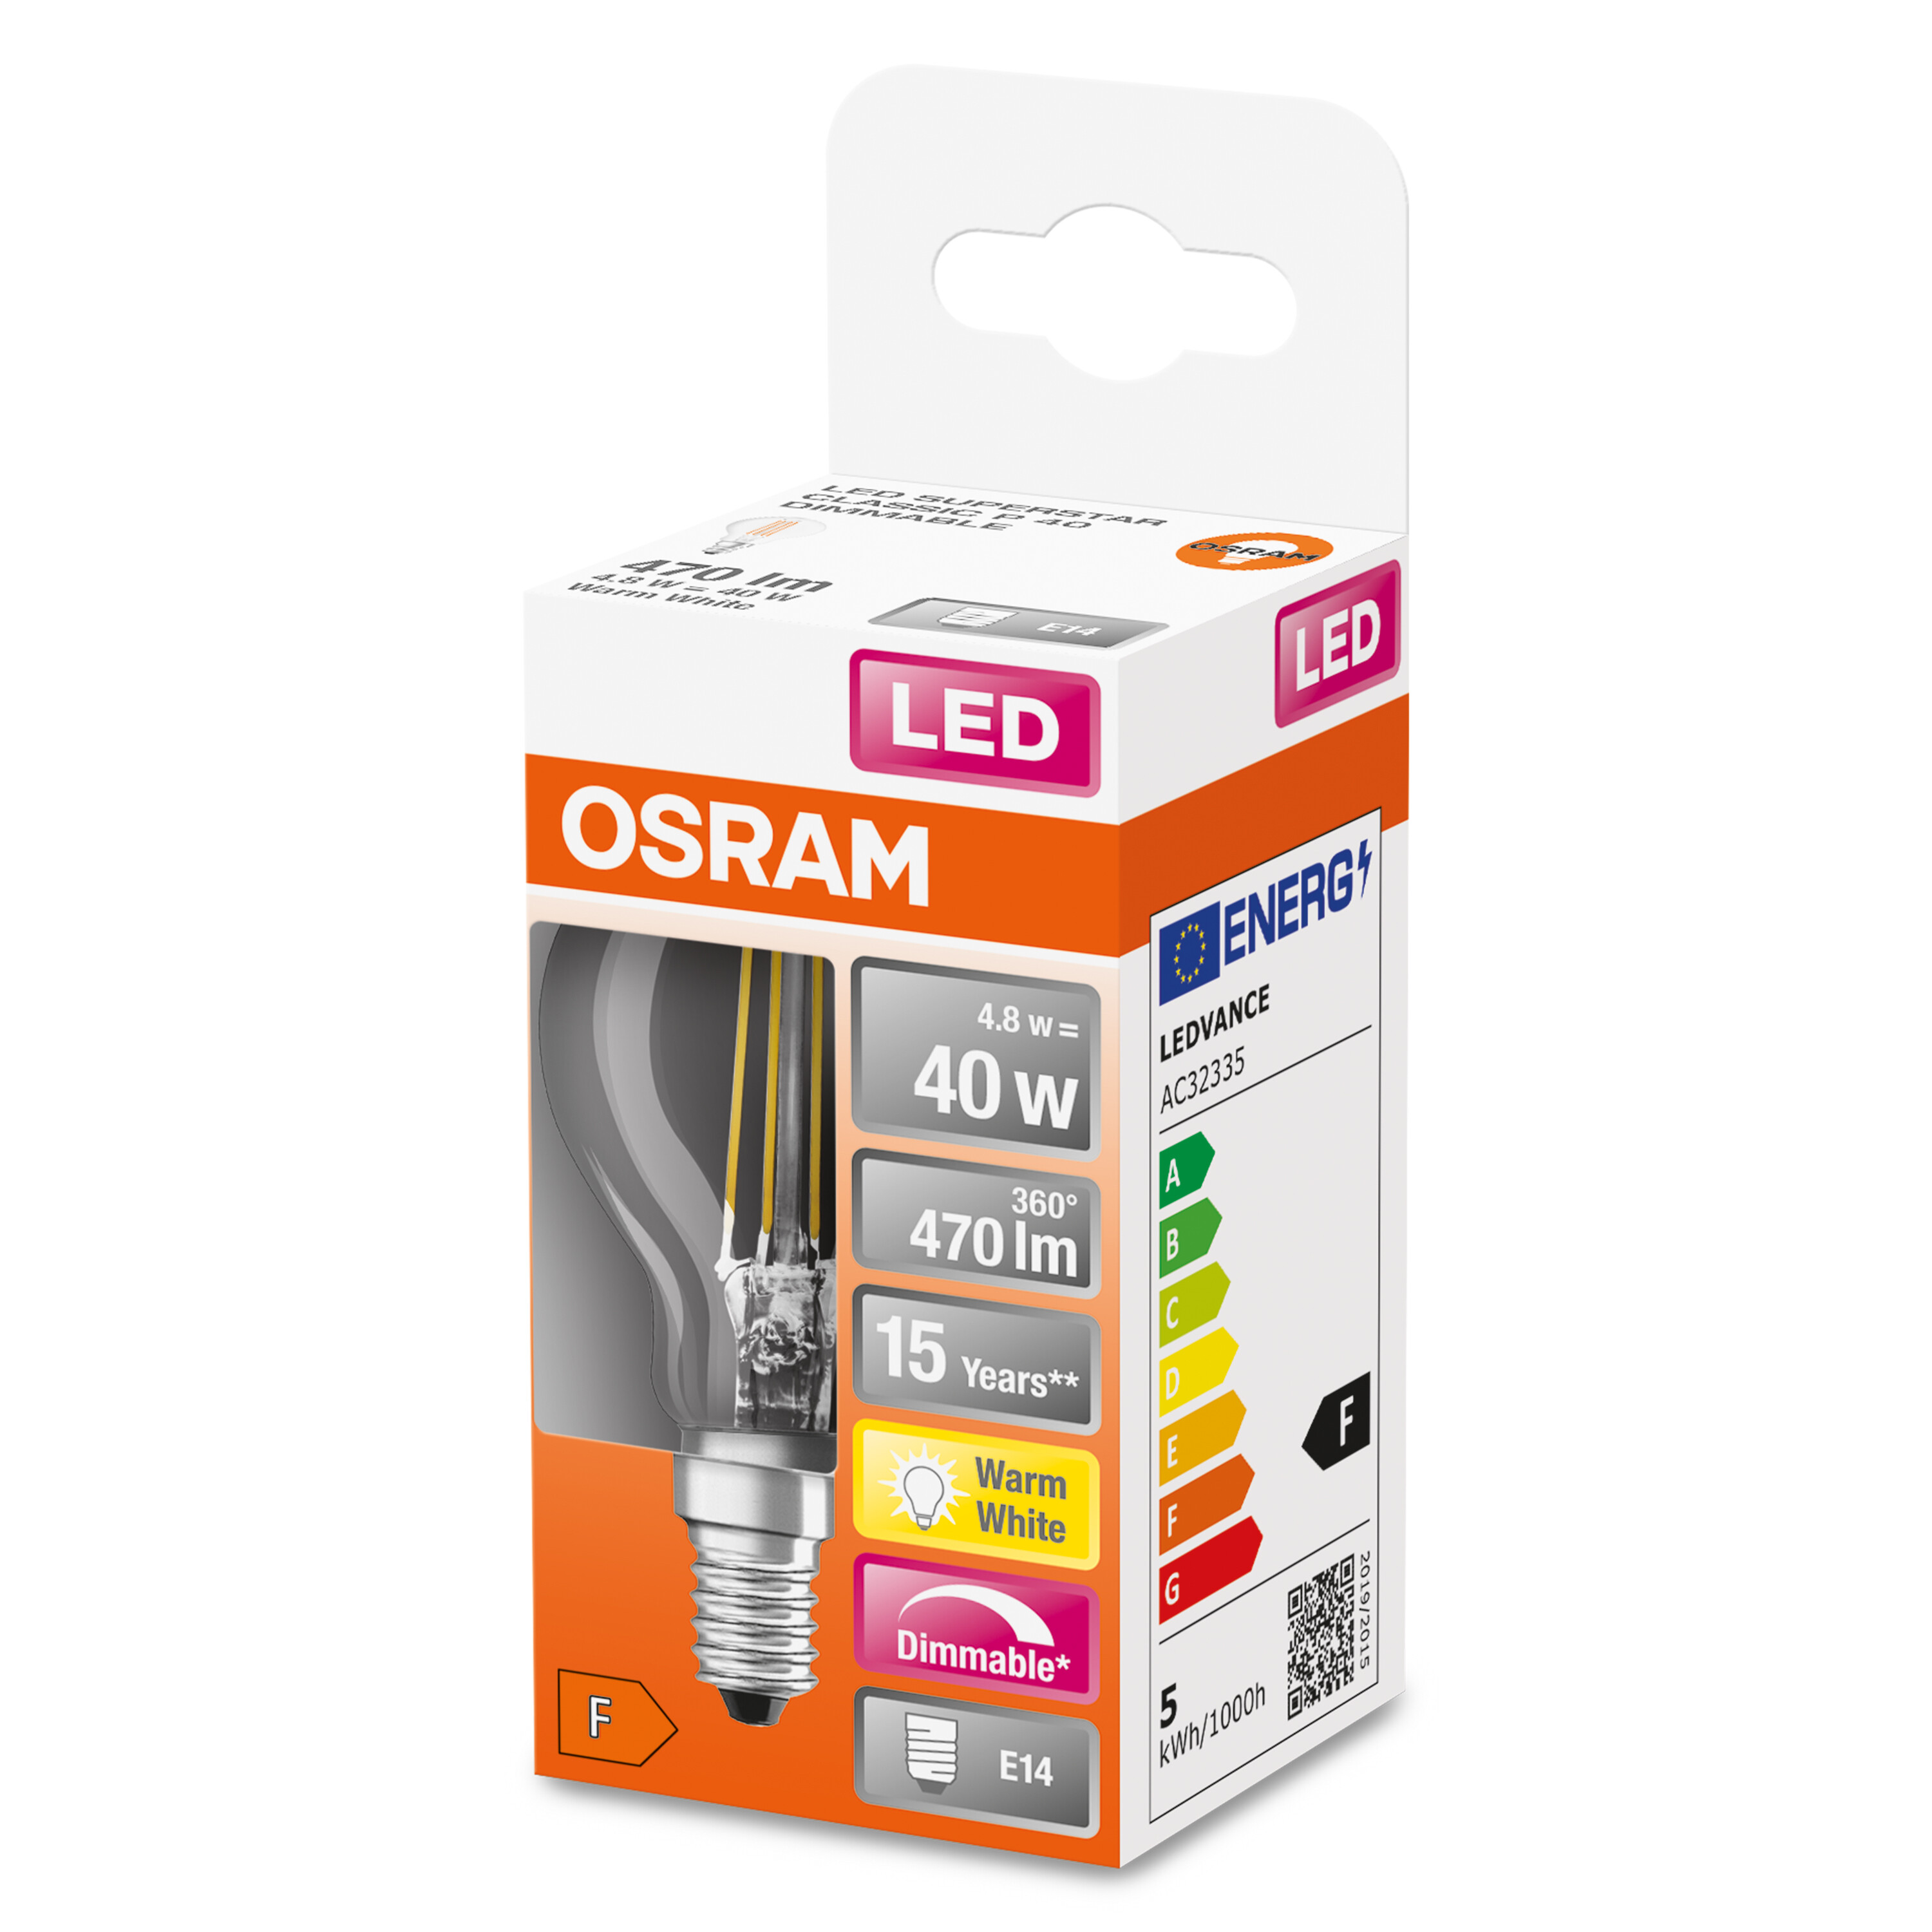 OSRAM  LED Retrofit CLASSIC P Lampe 470 Lumen Warmweiß DIM LED